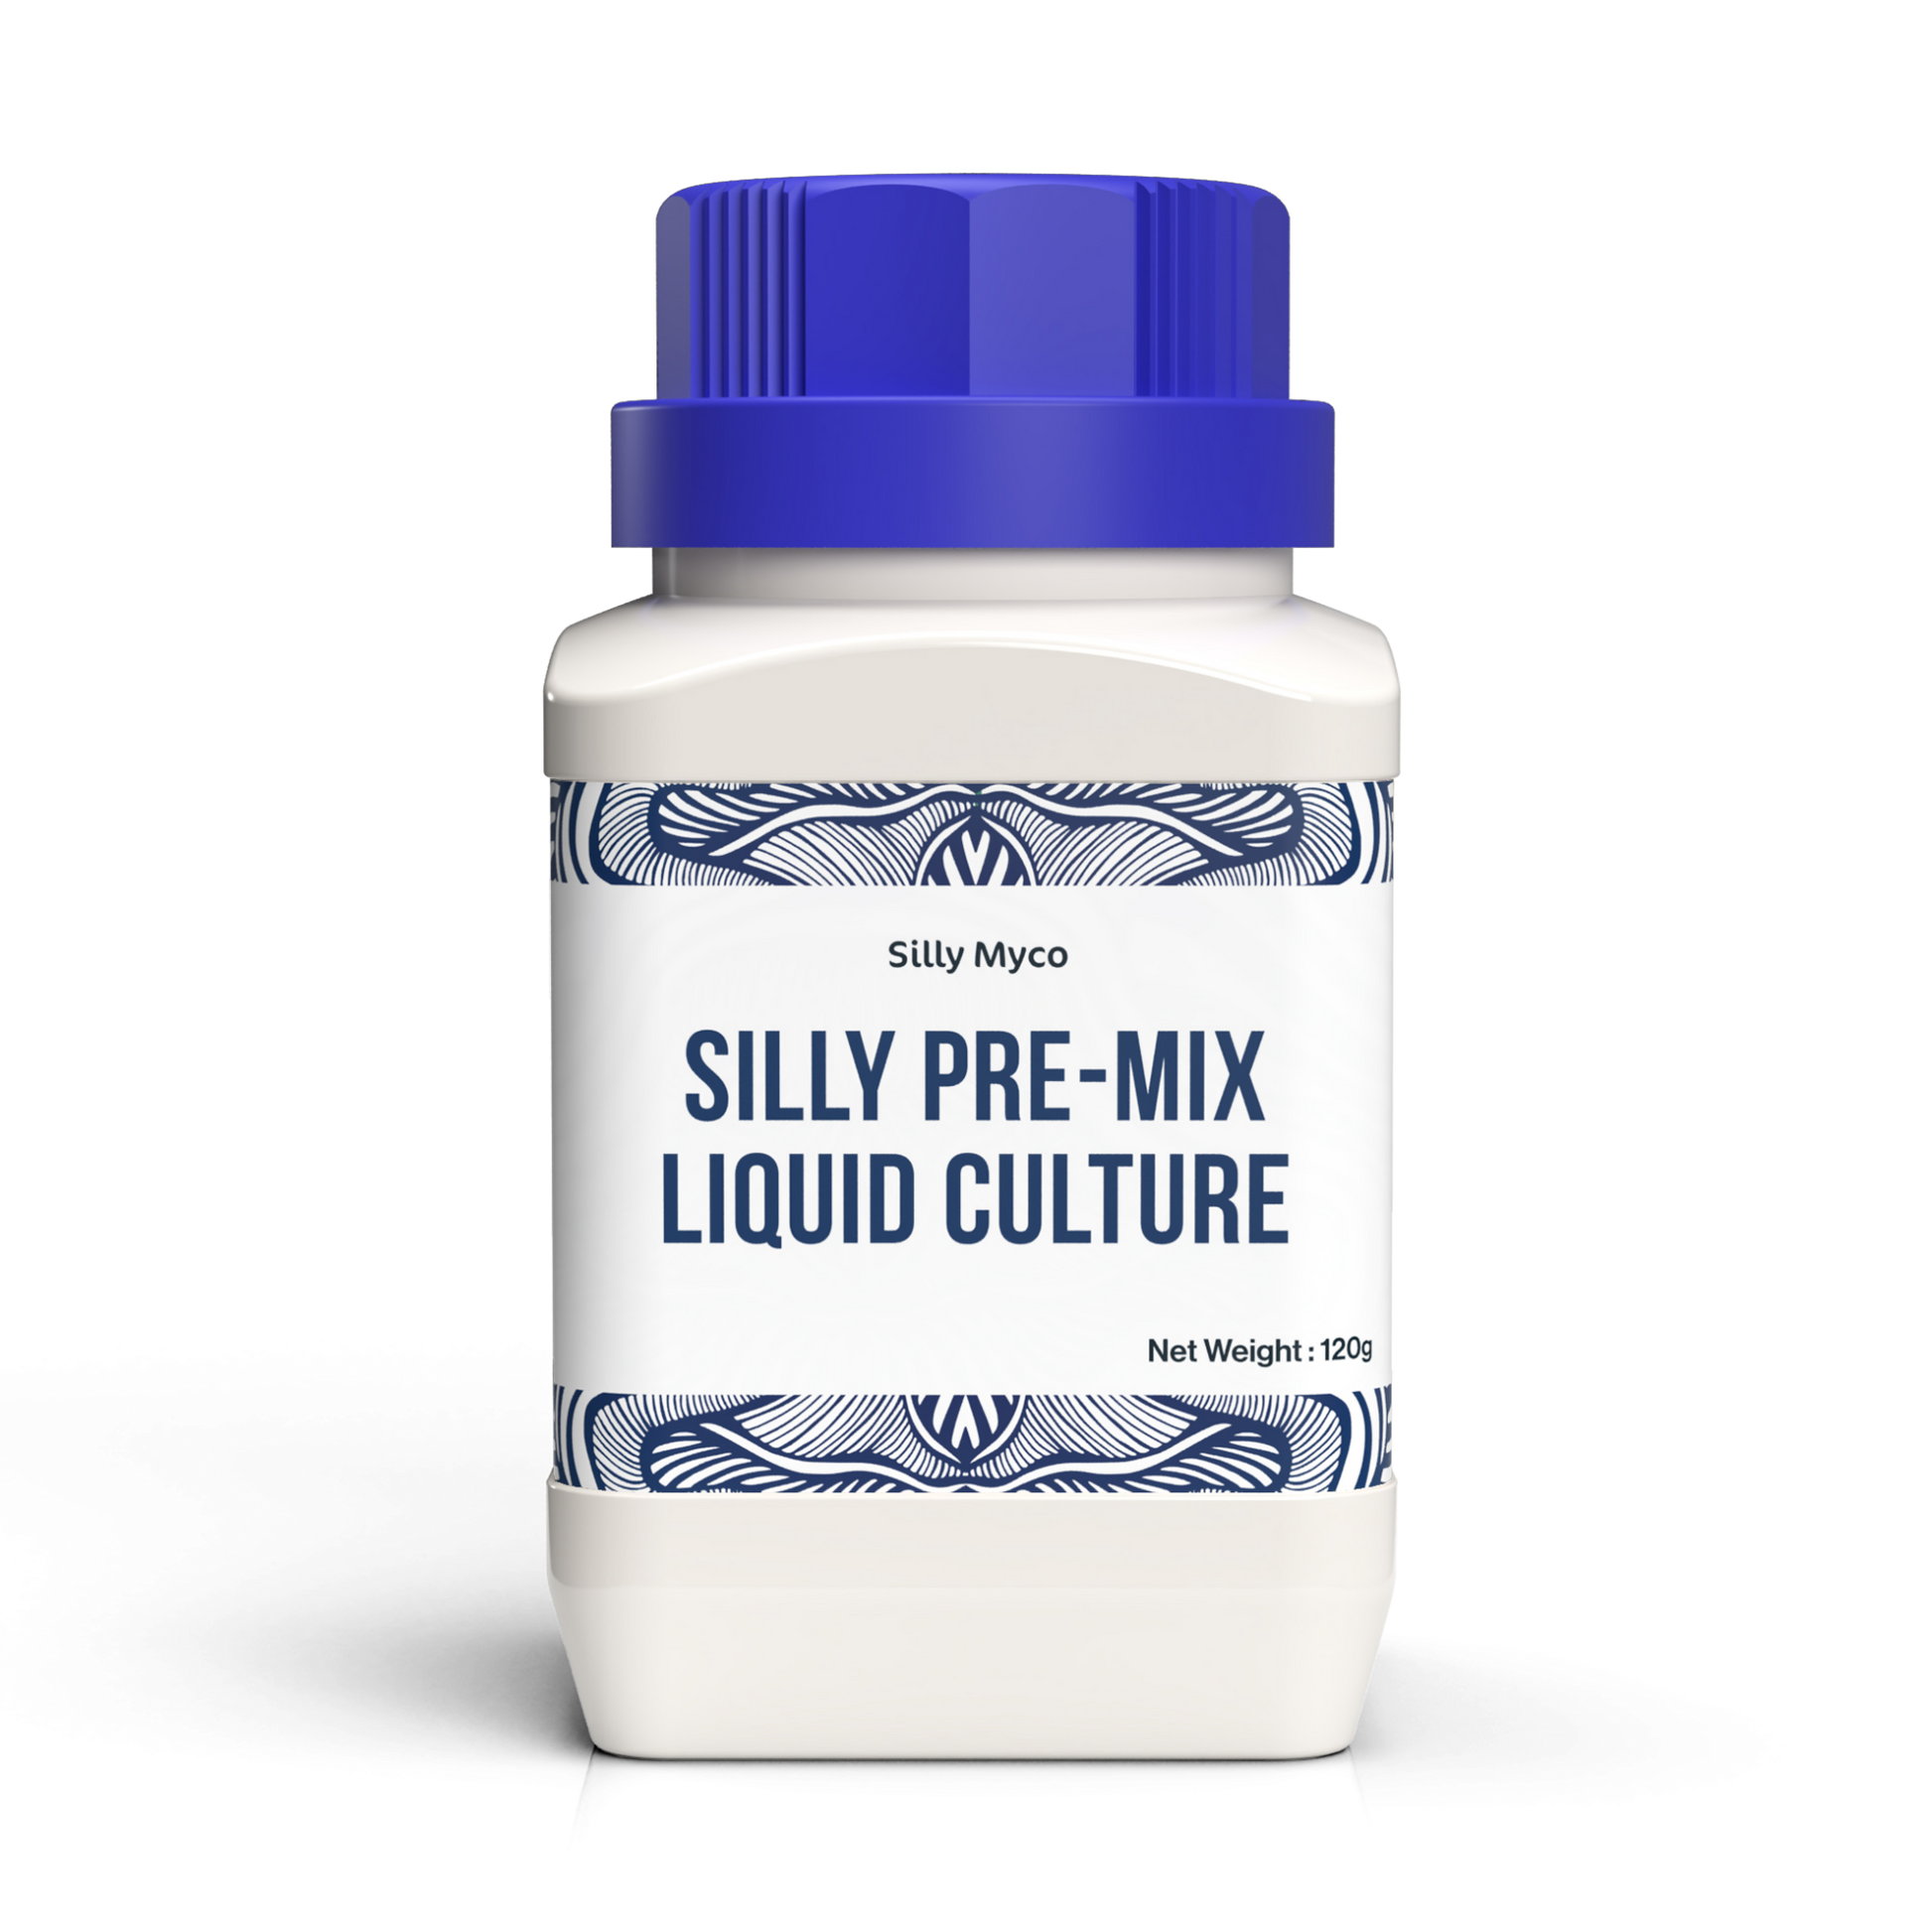 Silly Pre-Mix Liquid Culture